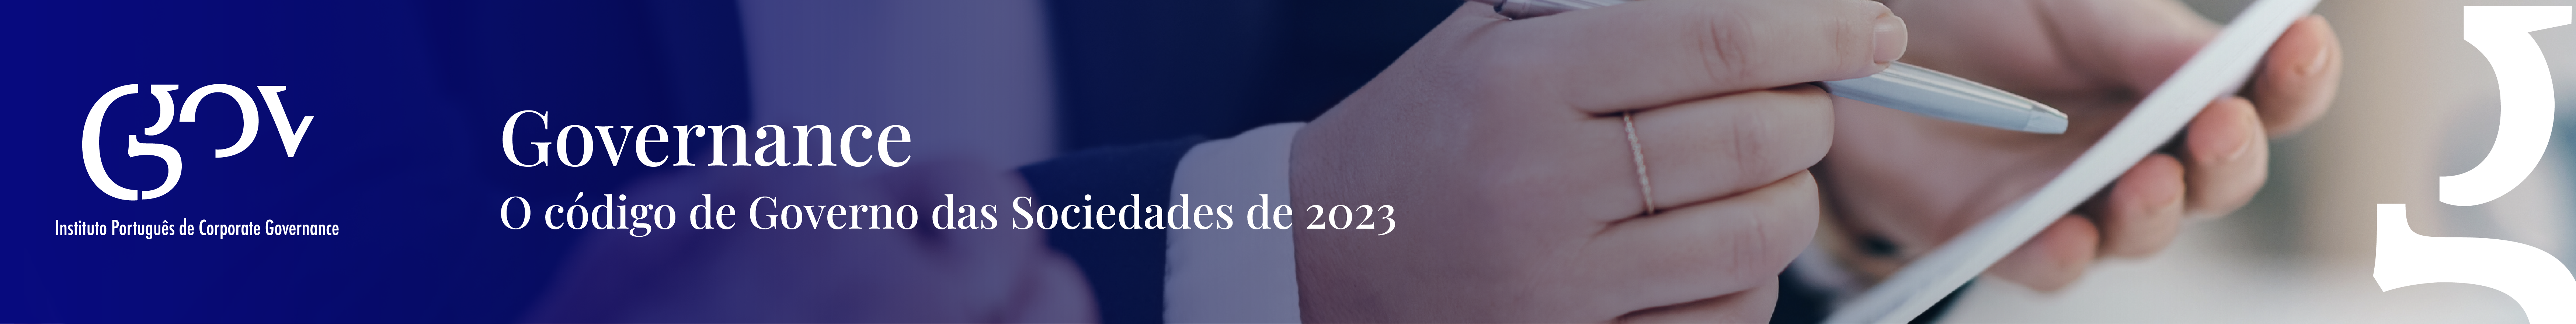 formatos-08 "O CÓDIGO DE GOVERNO DAS SOCIEDADES DE 2023"